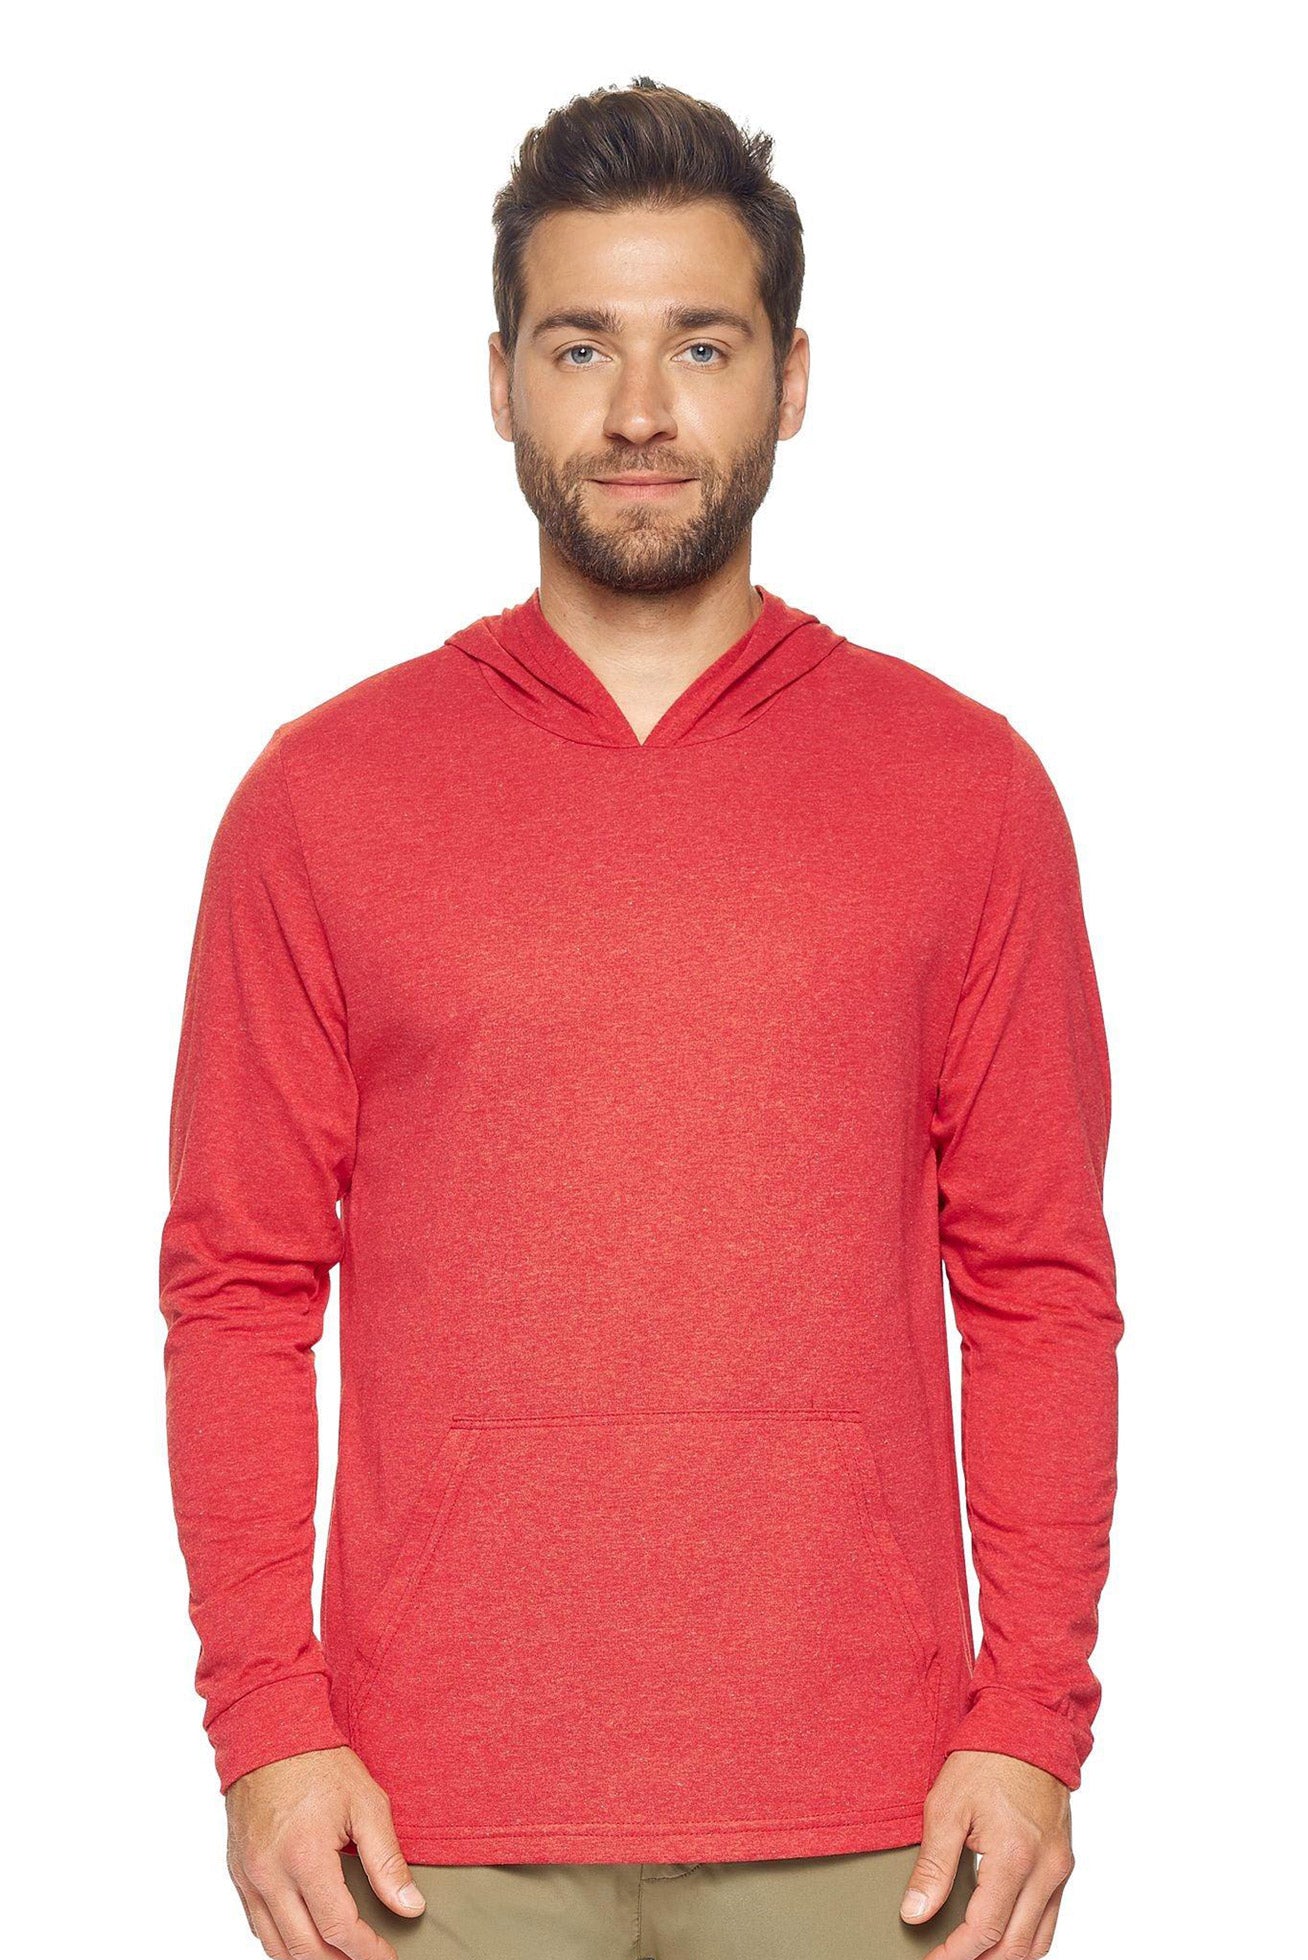 Expert Brand Wholesale Men's Hoodie Performance Active Shirt in Dark Heather Red#dark-heather-red